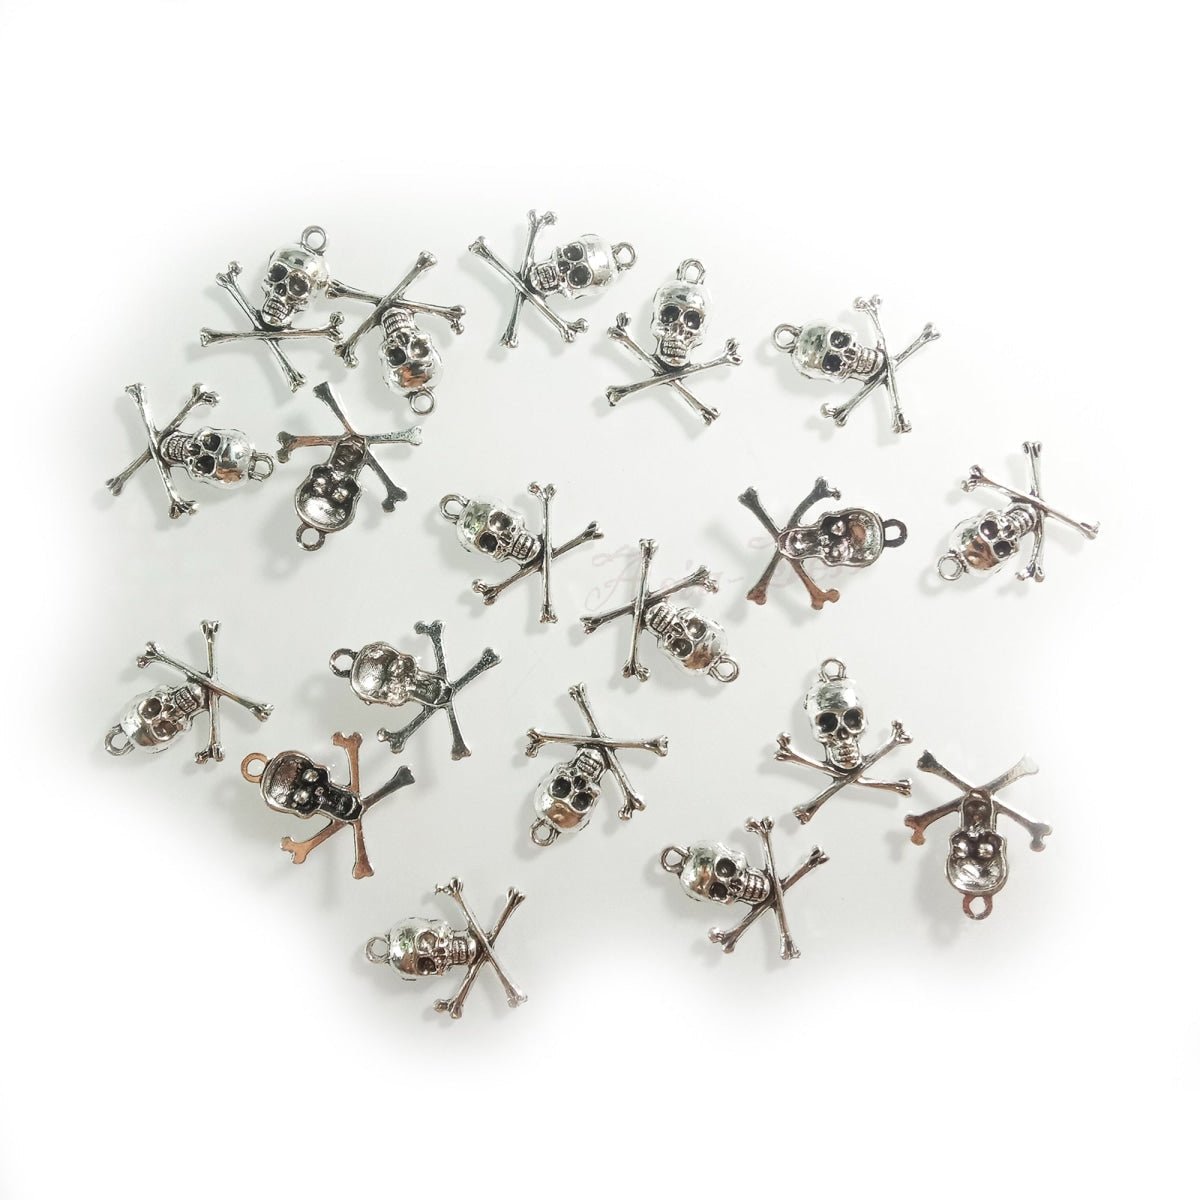 10pcs Skulls Spiders Charms Retro Crystal Halloween Pendants Tibetan Silver Tone - 21x24mm Skull and Crossbones - - Asia Sell